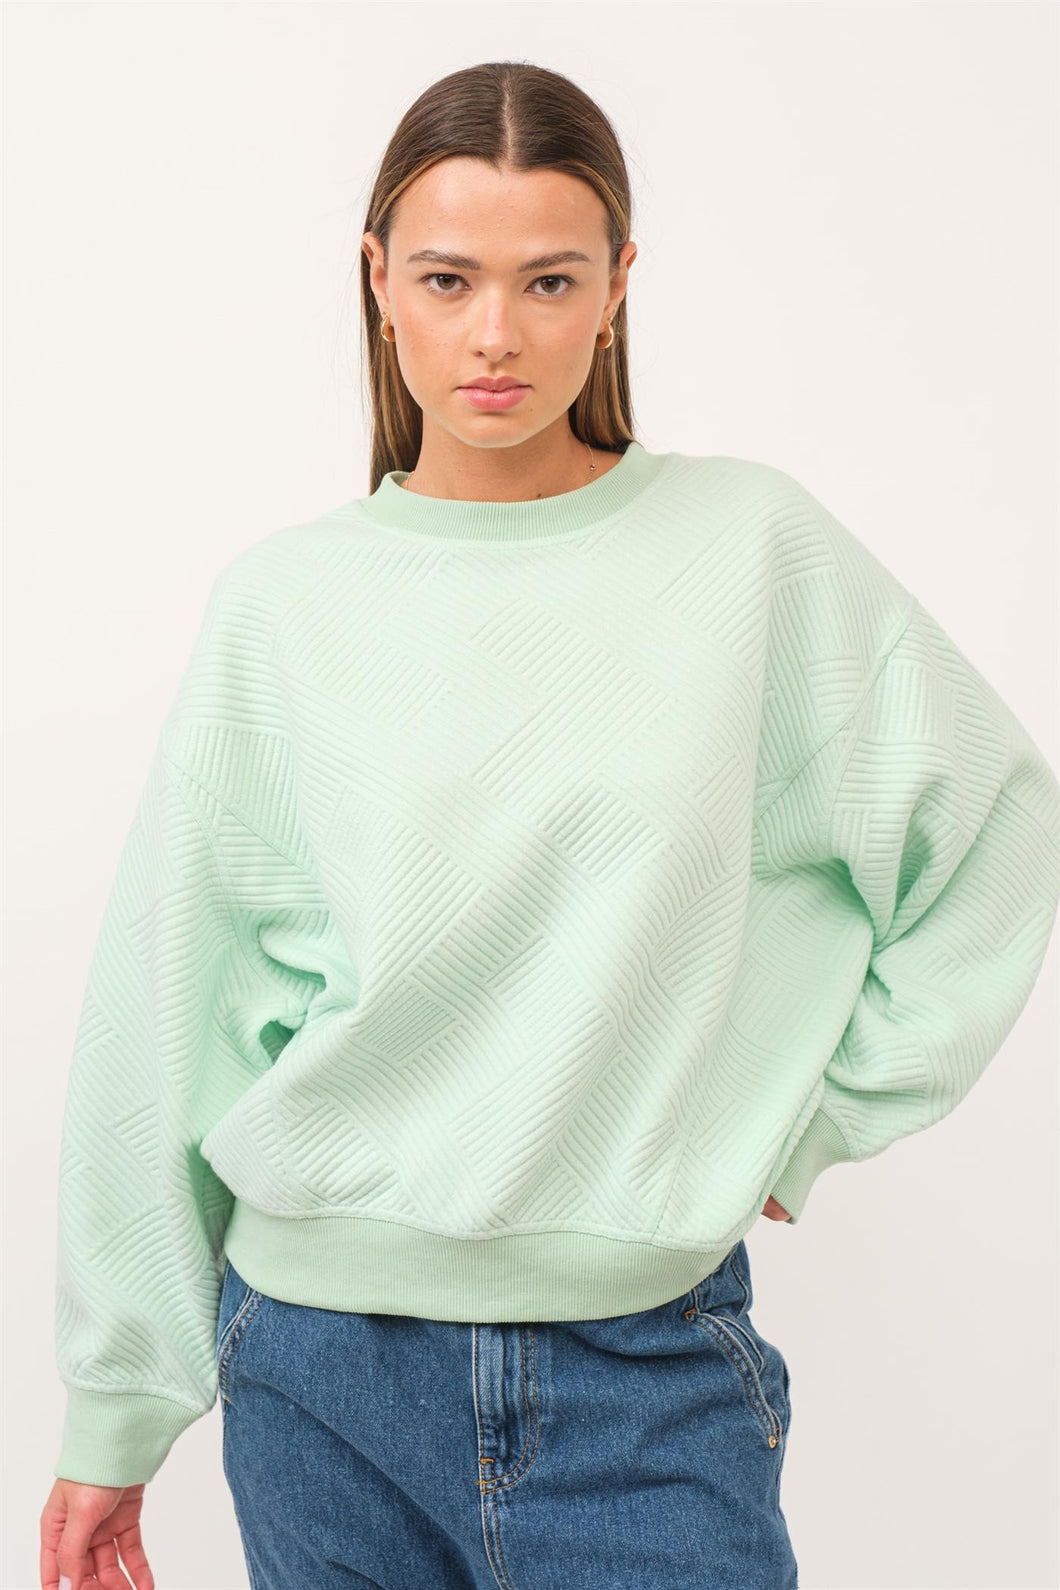 Pastel Mint Comfy Sweatshirt